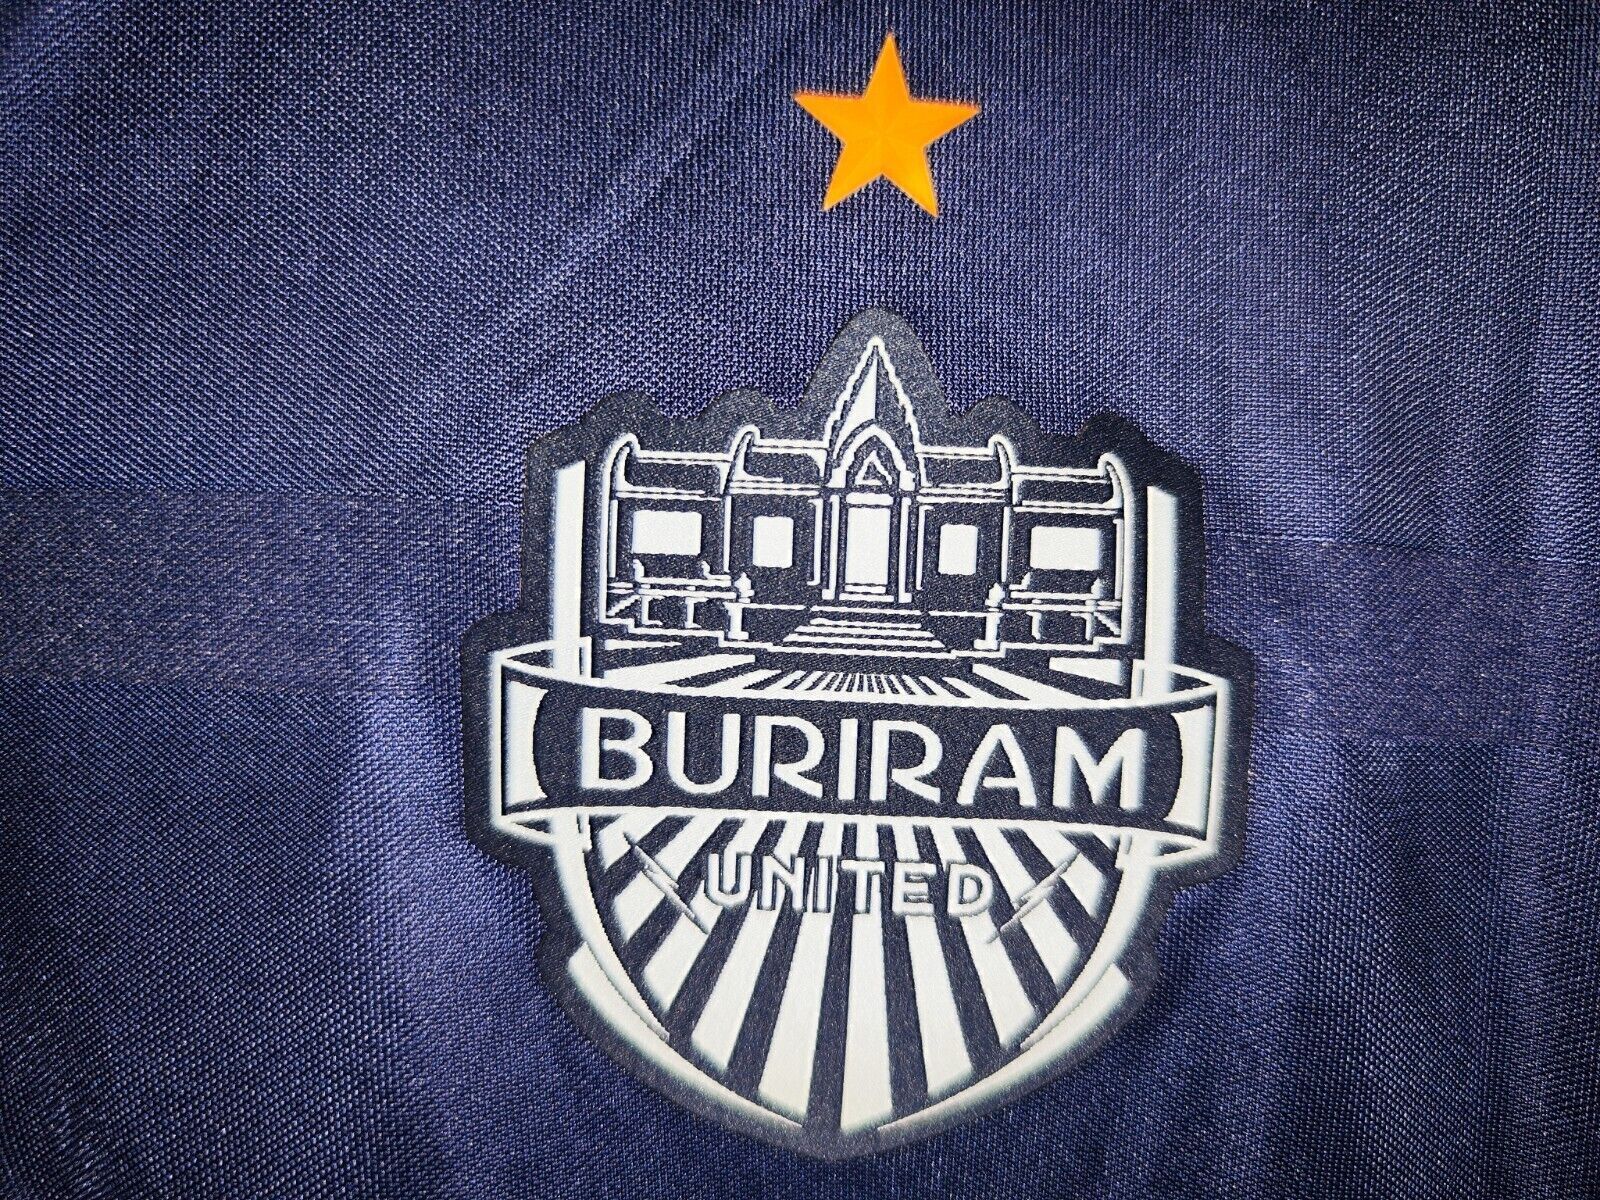 Buriram United F.C. Wallpapers